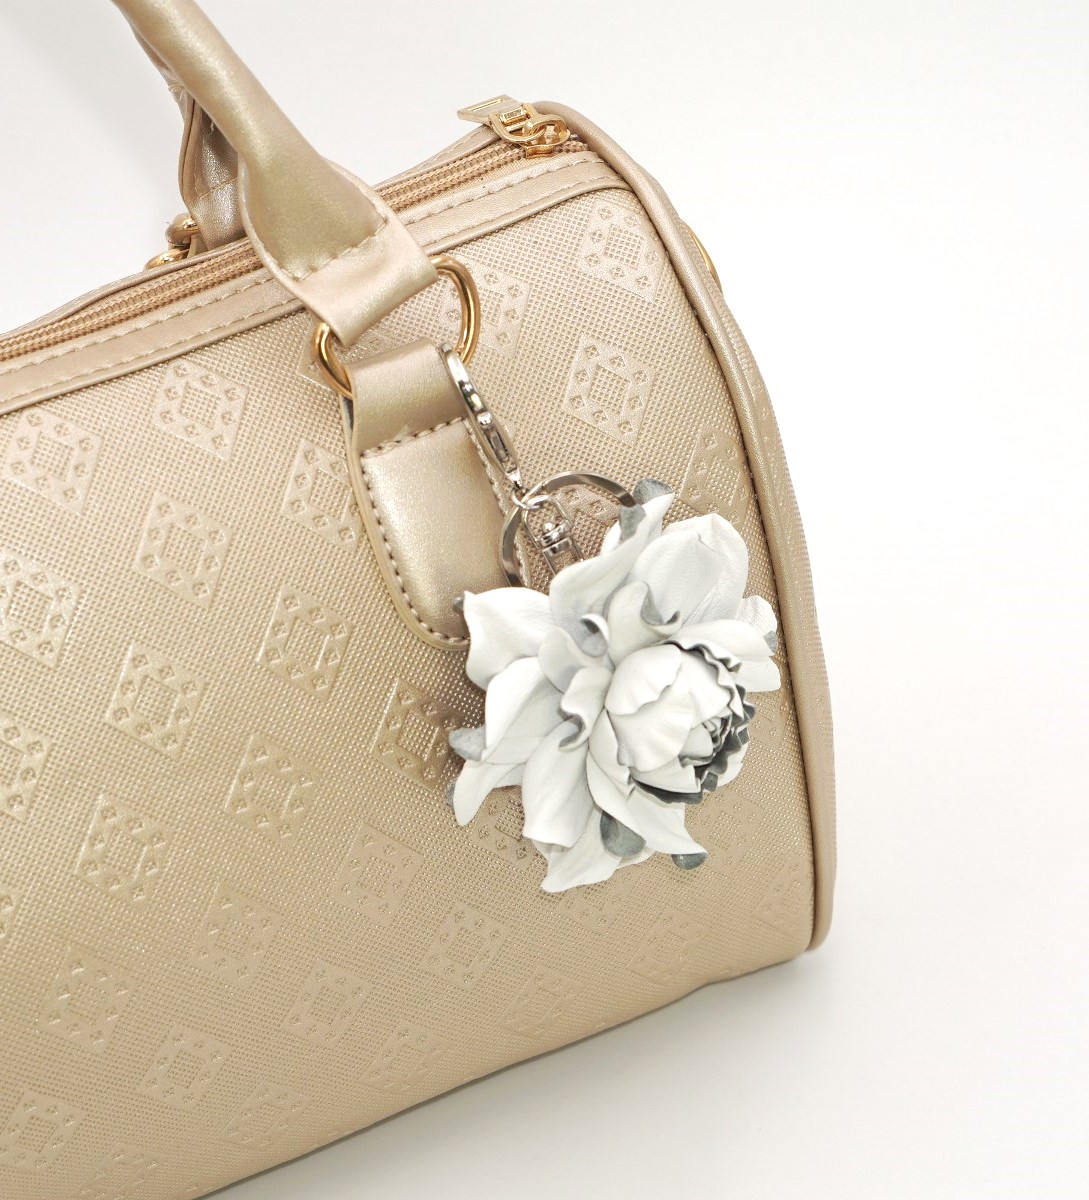 SUESUU Women's Flower Bag Charms Enameled Keychain Purse Accessories